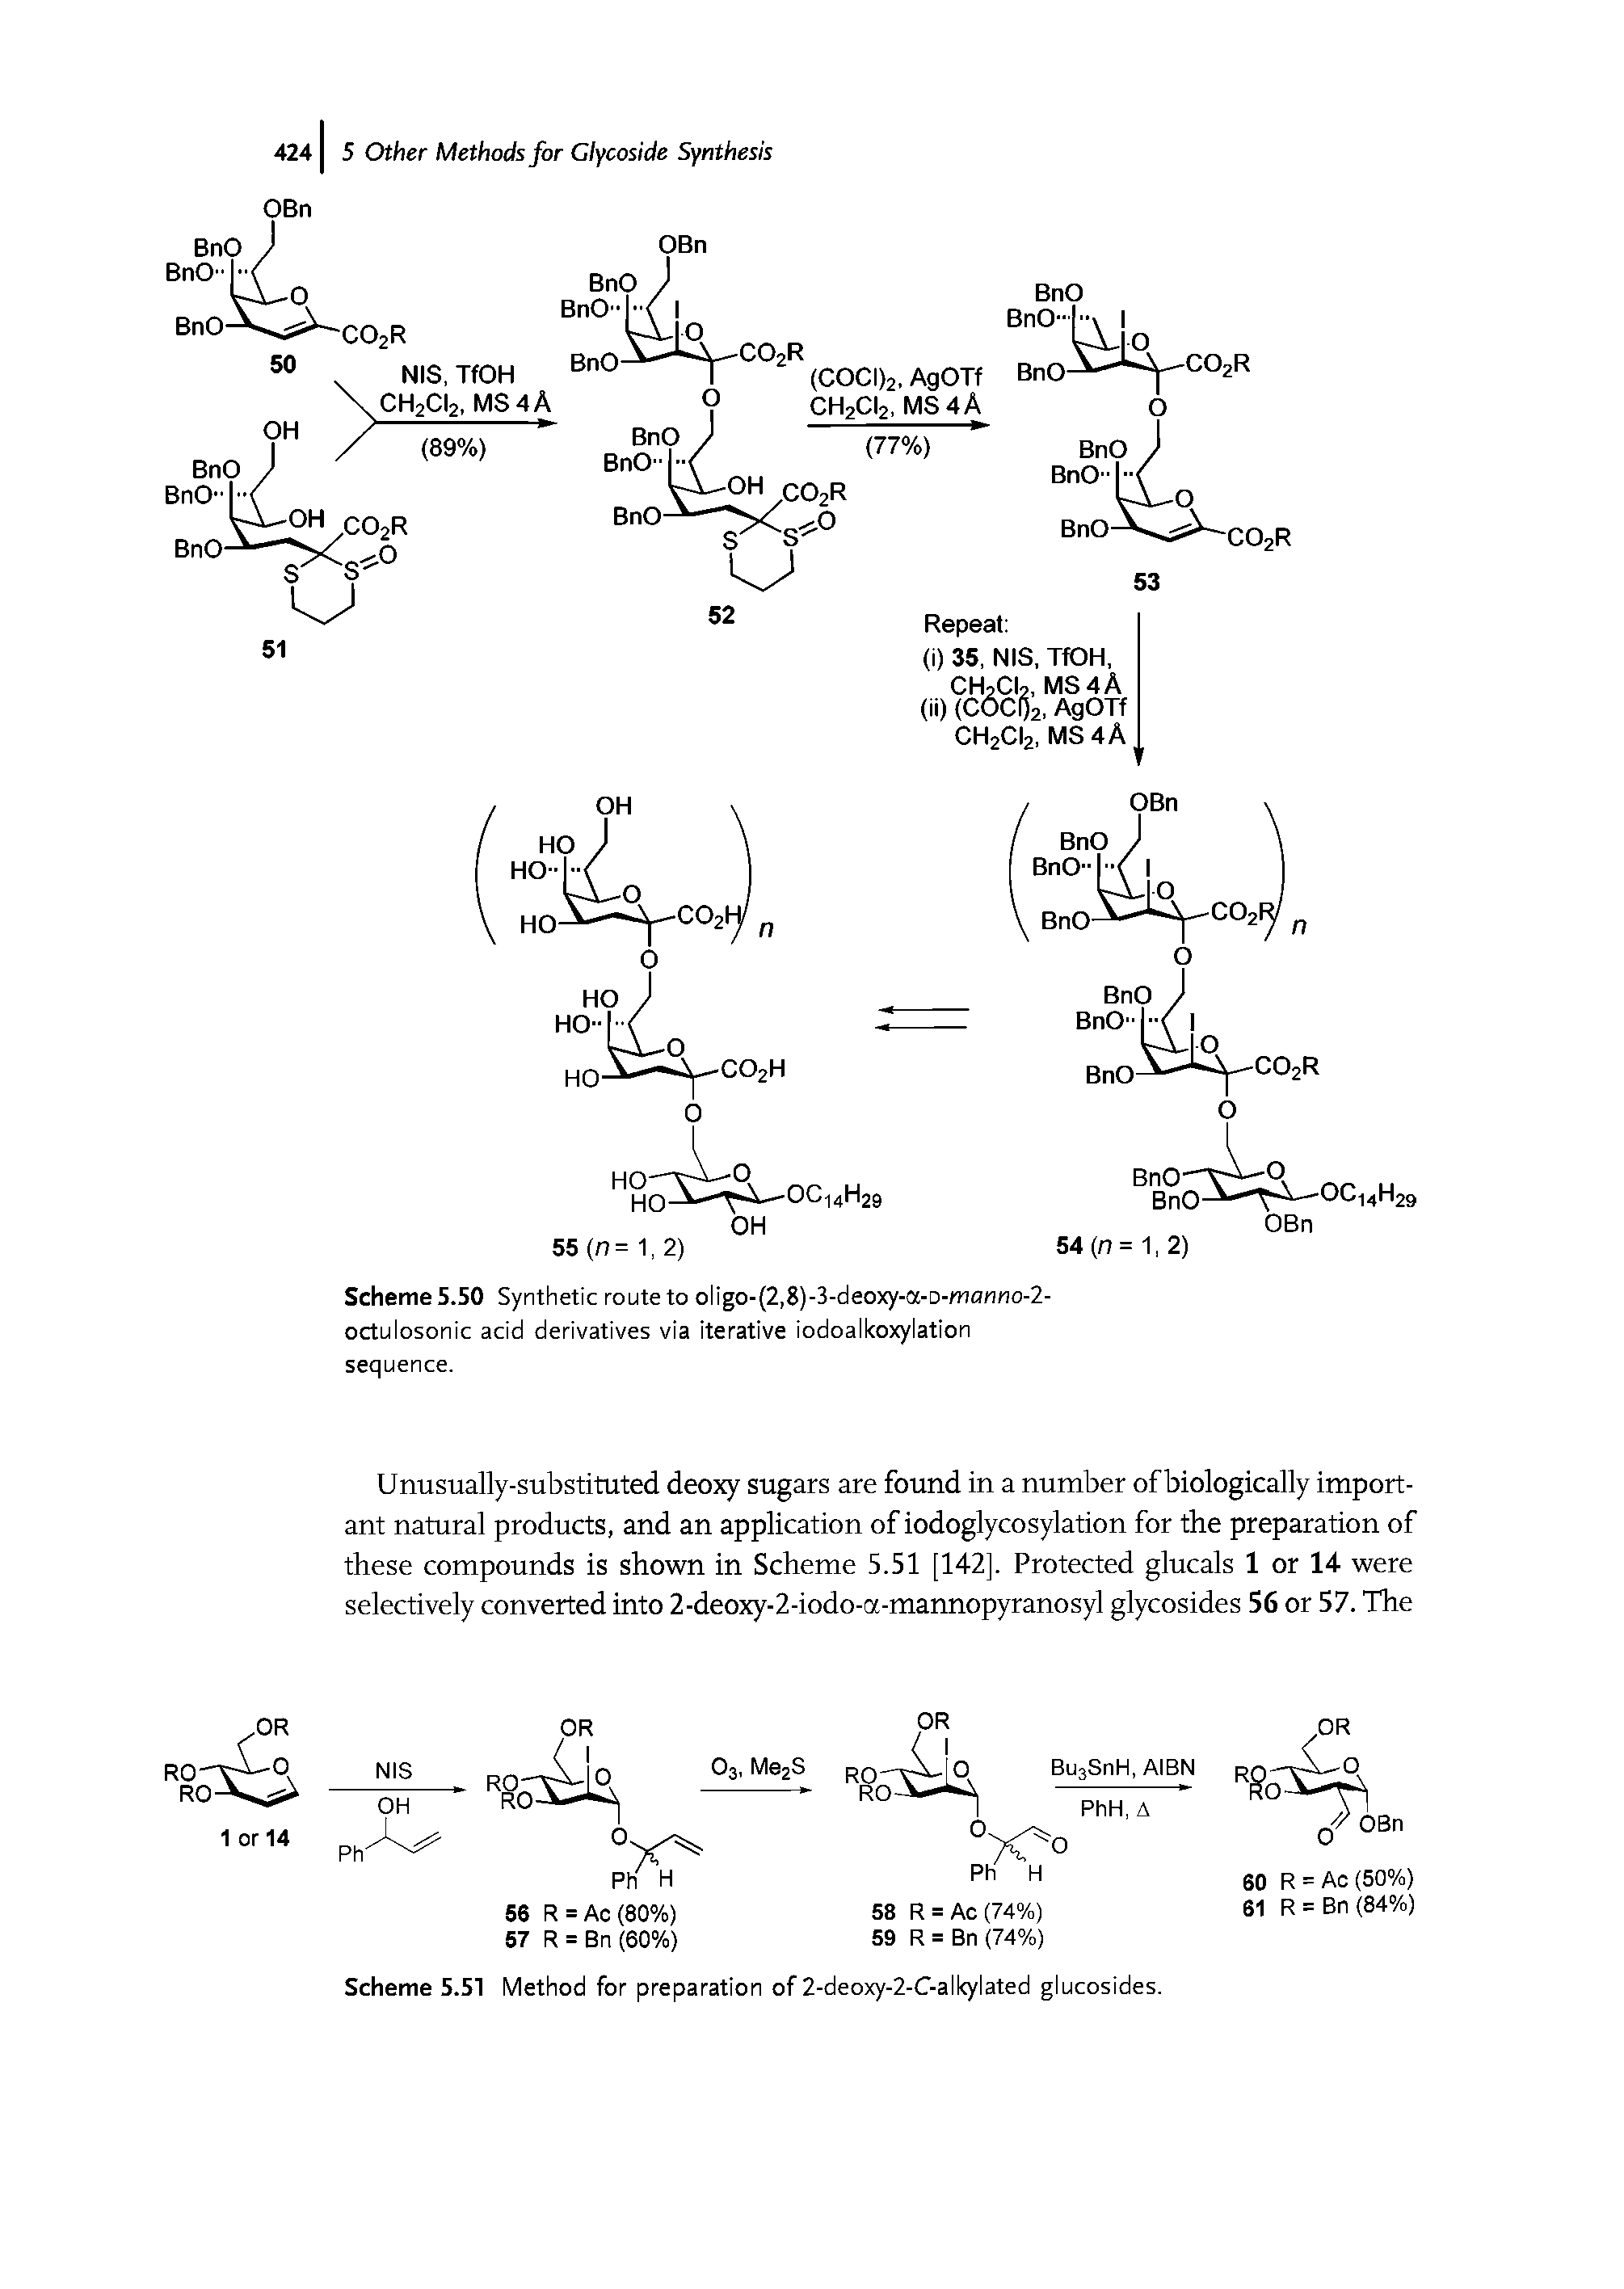 Scheme 5.50 Synthetic route to oligo-(2,8)-3-deoxy-a-D-manno-2-octulosonic acid derivatives via iterative iodoalkoxylation sequence.